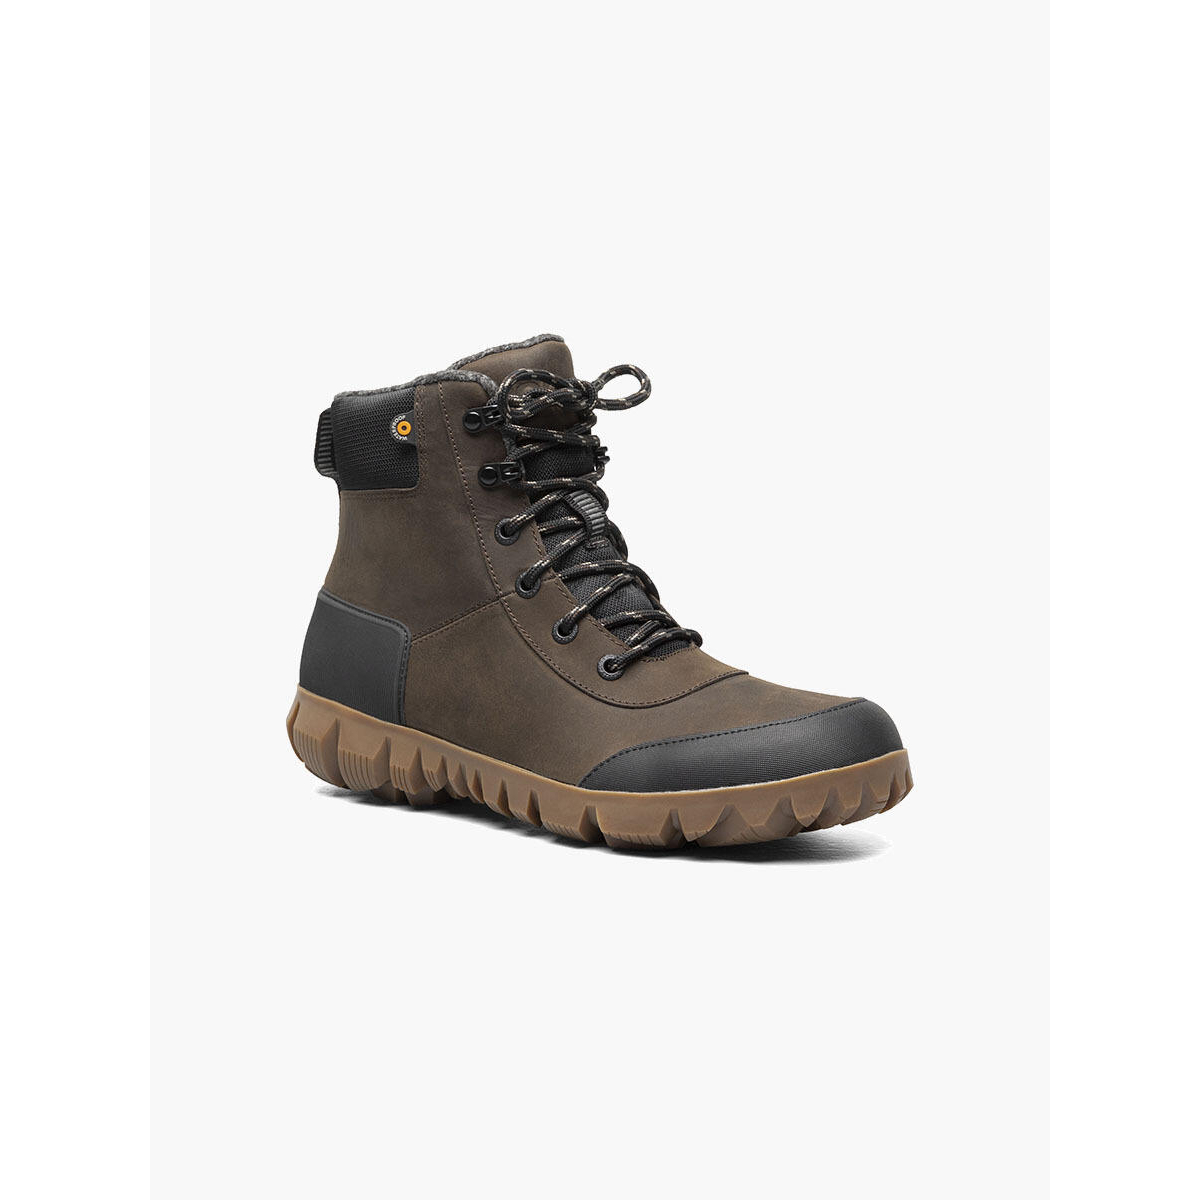 BOGS Men's Arcata Urban Leather Mid Winter Boots Chocolate - 72909-202 CHOCOLATE - CHOCOLATE, 9.5-M